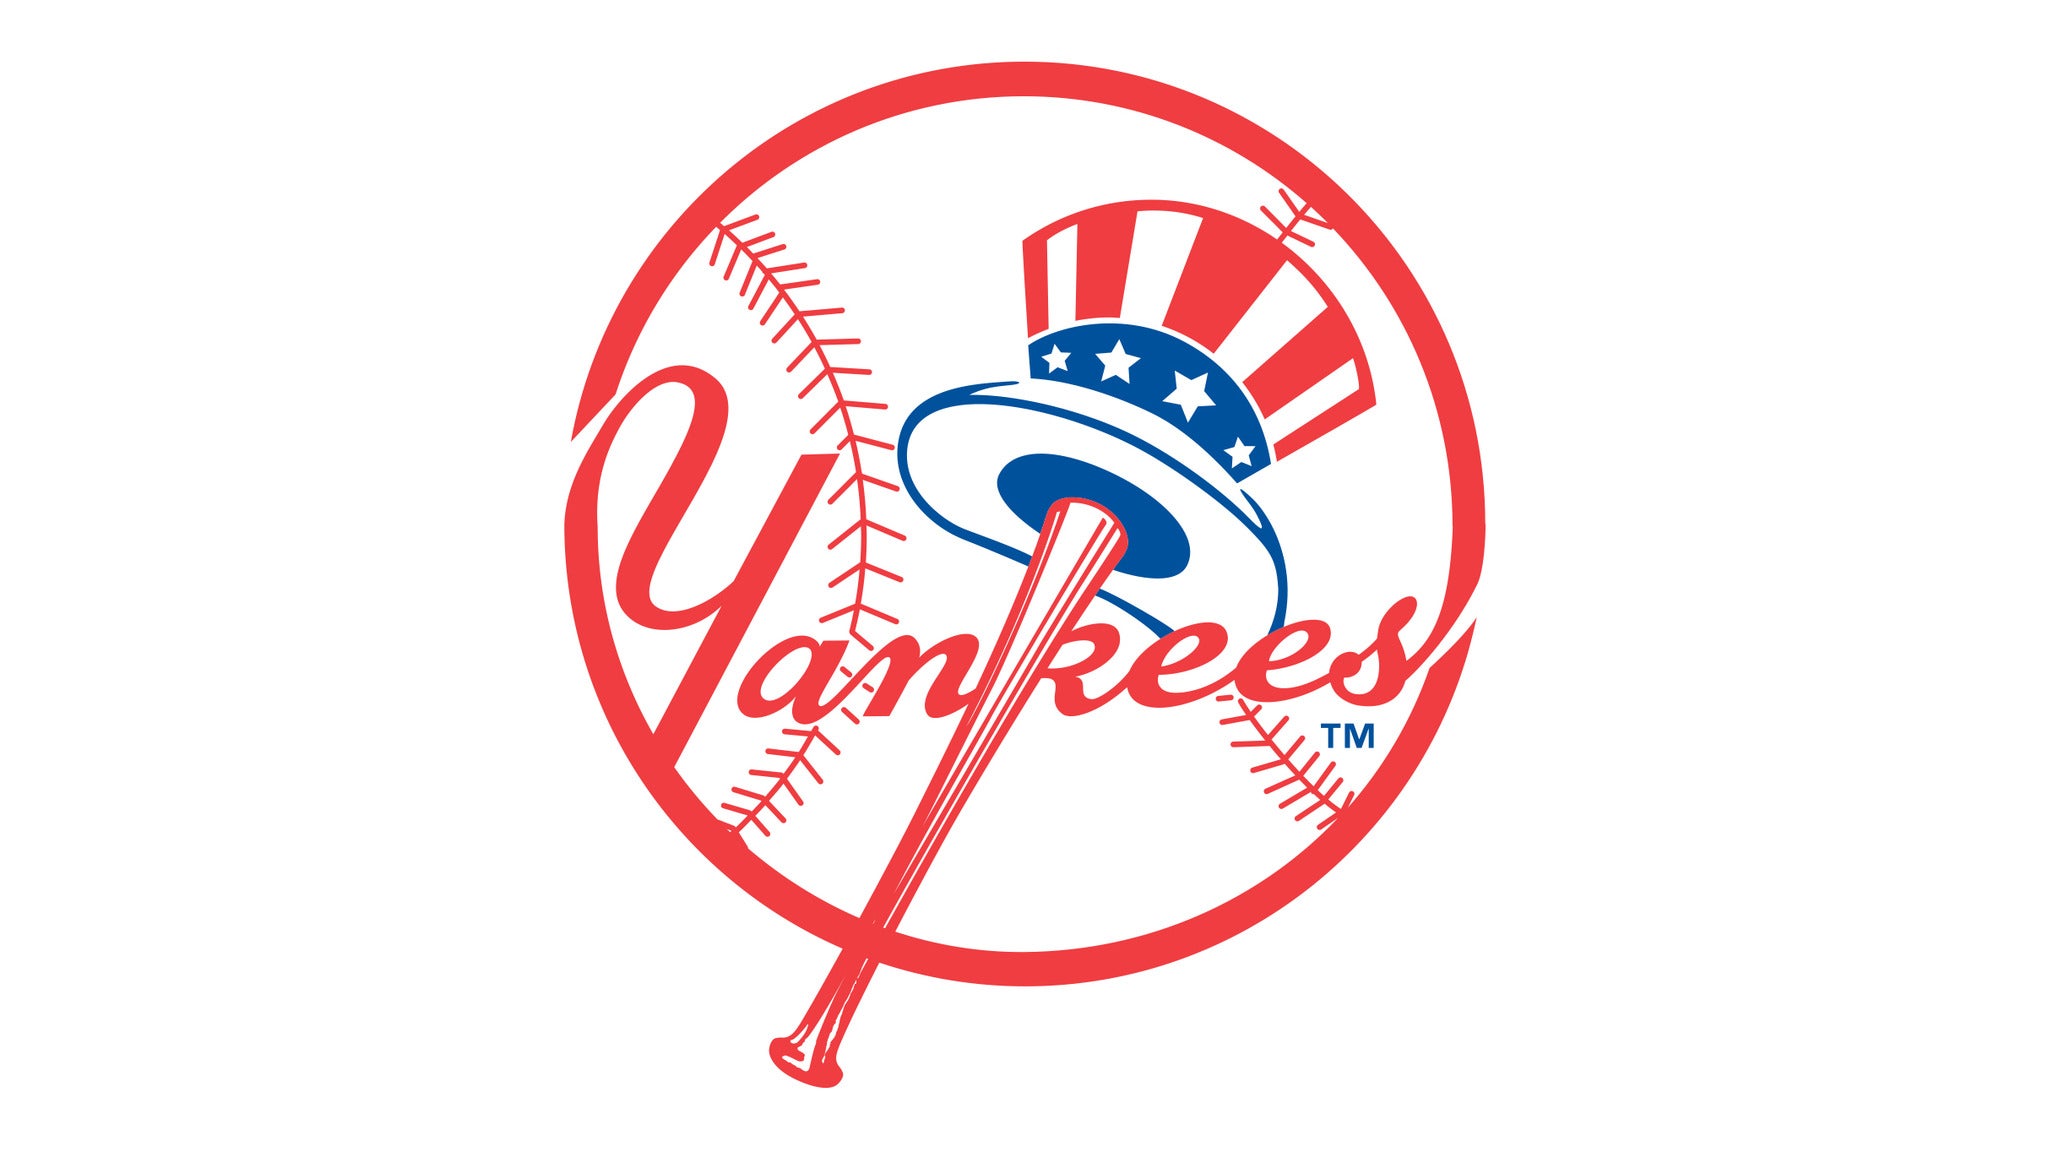 New York Yankees v. Seattle Mariners